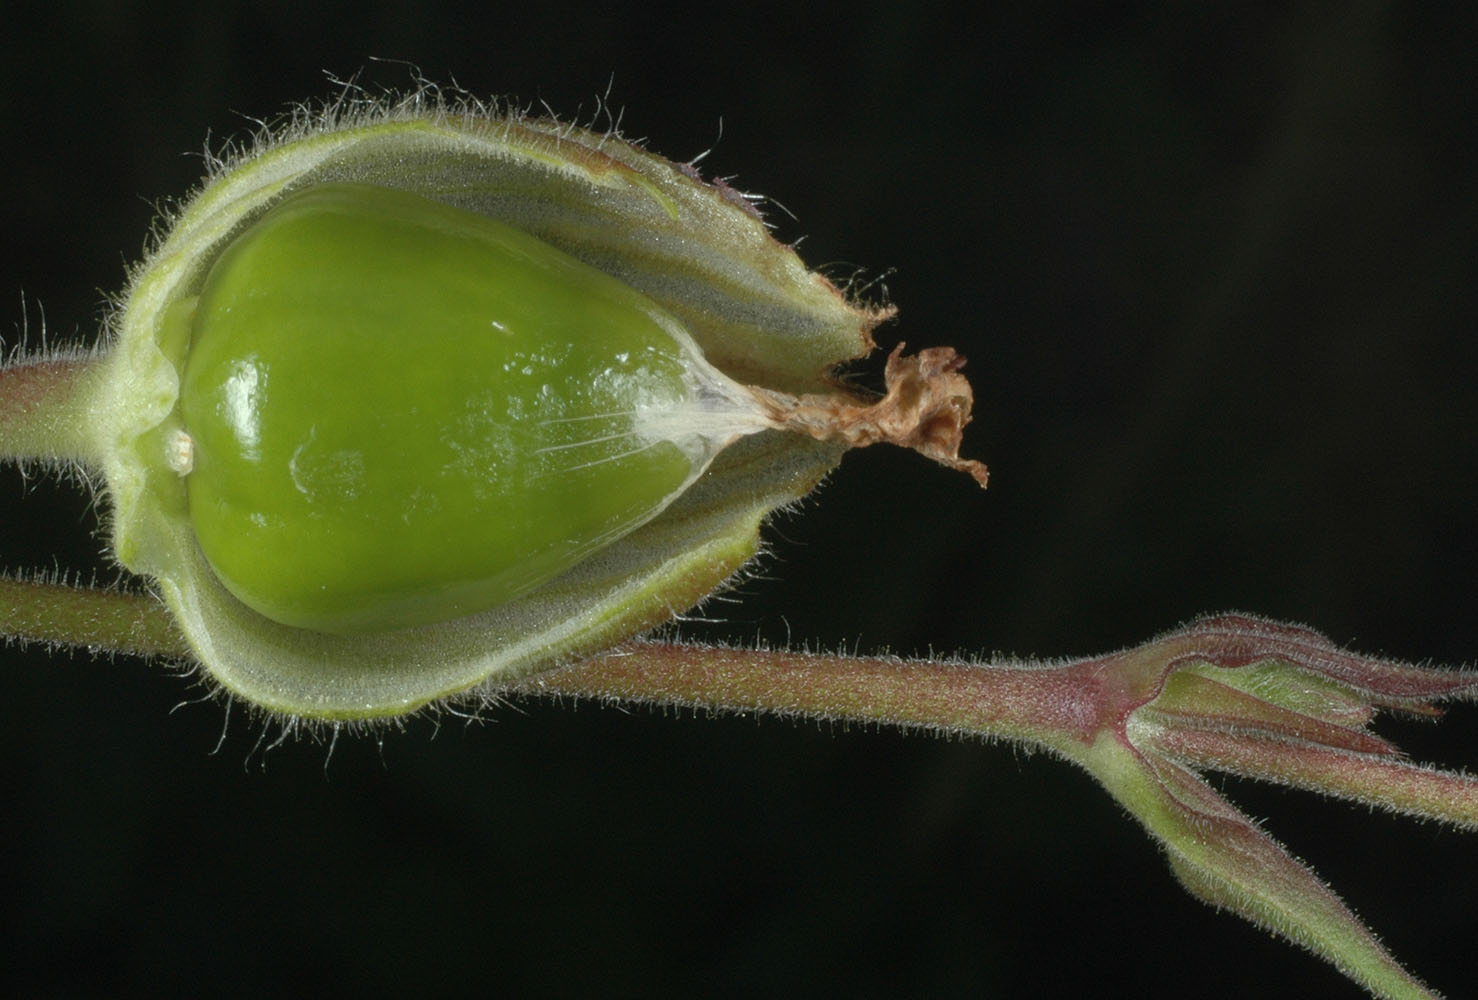 Flora of Eastern Washington Image: Silene latifolia